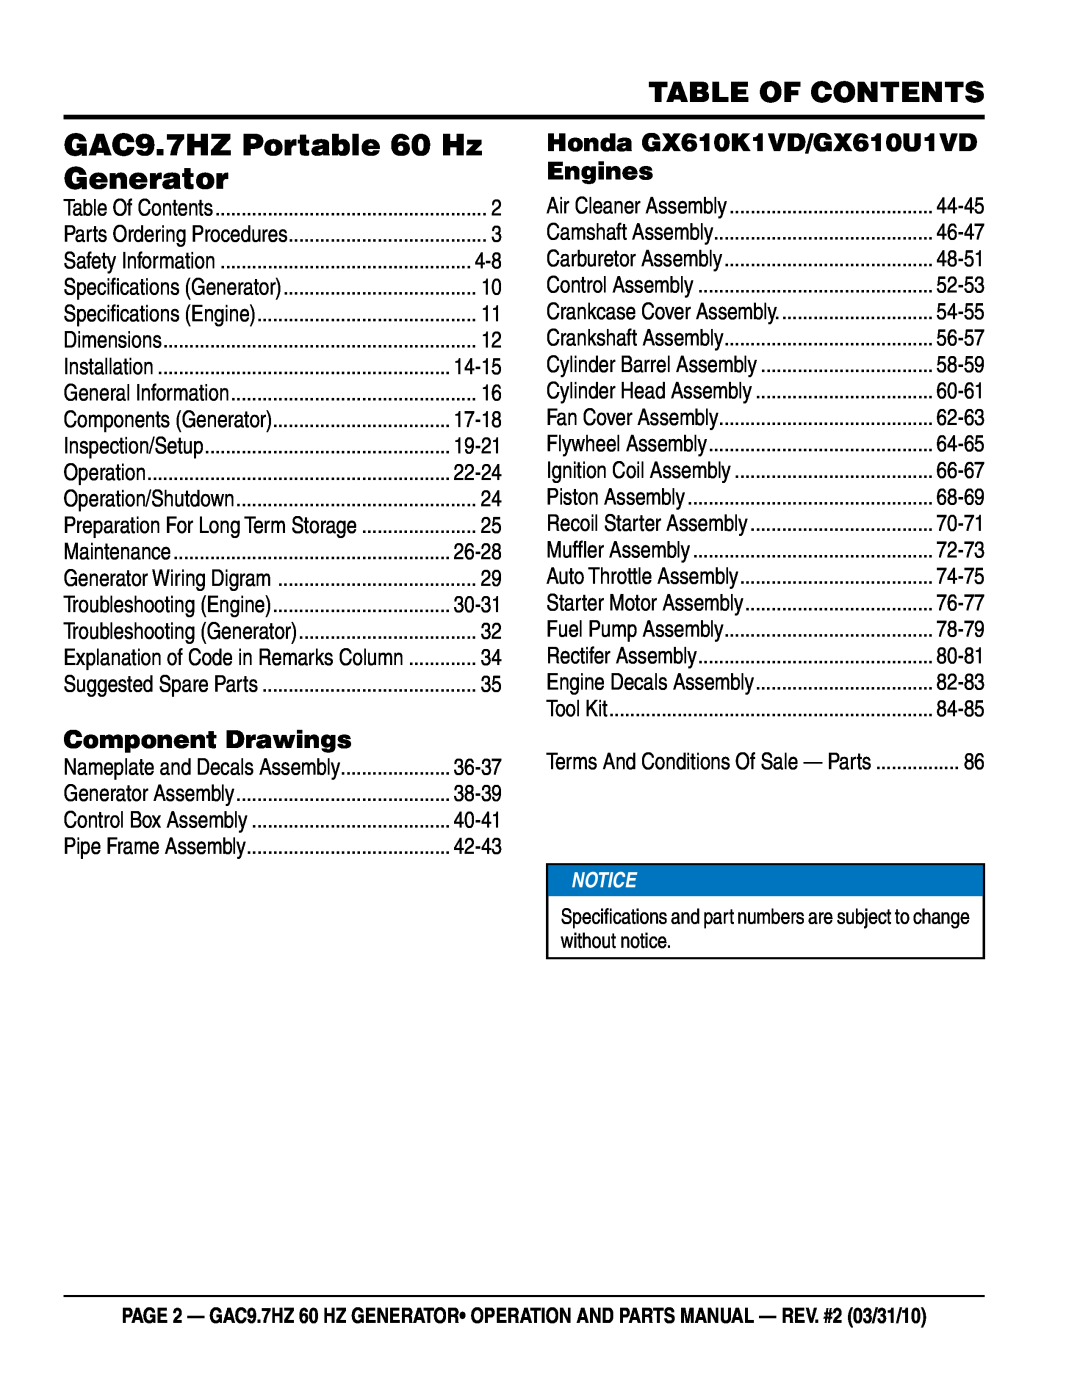 Multiquip GAC-9.7HZ manual Table of Contents, Component Drawings, Honda GX610K1VD/GX610U1VD Engines 